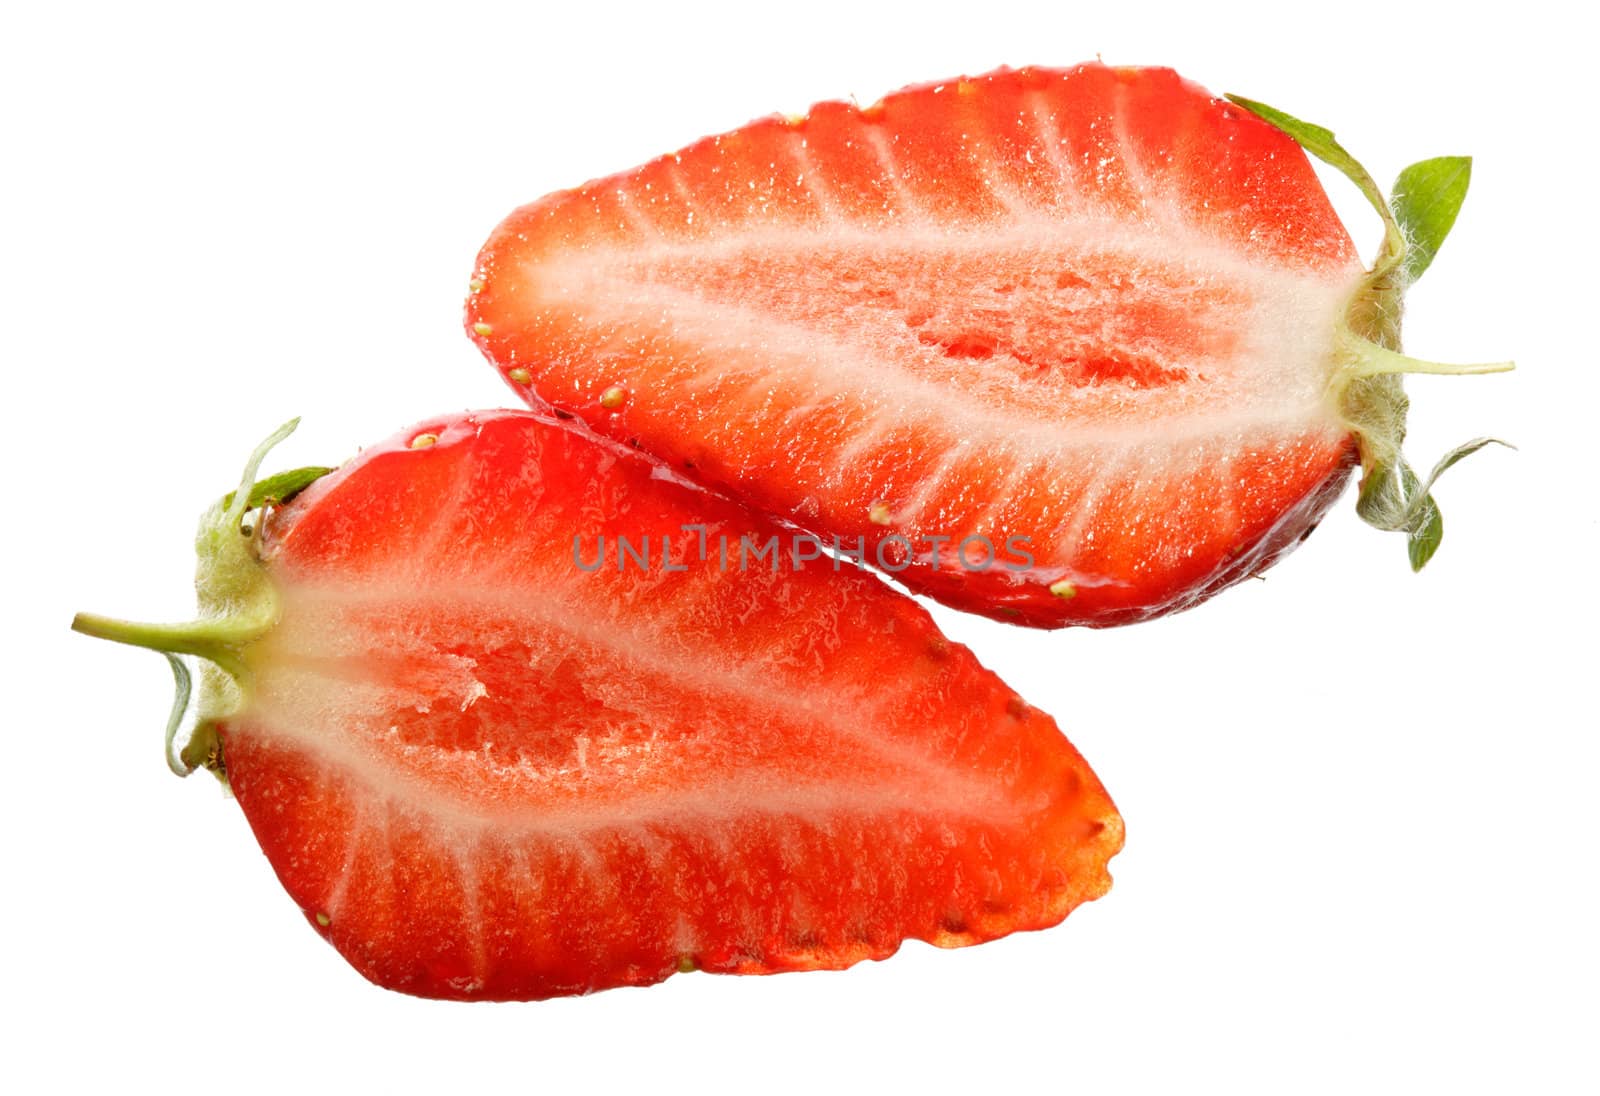 Sliced strawberry by ecobo